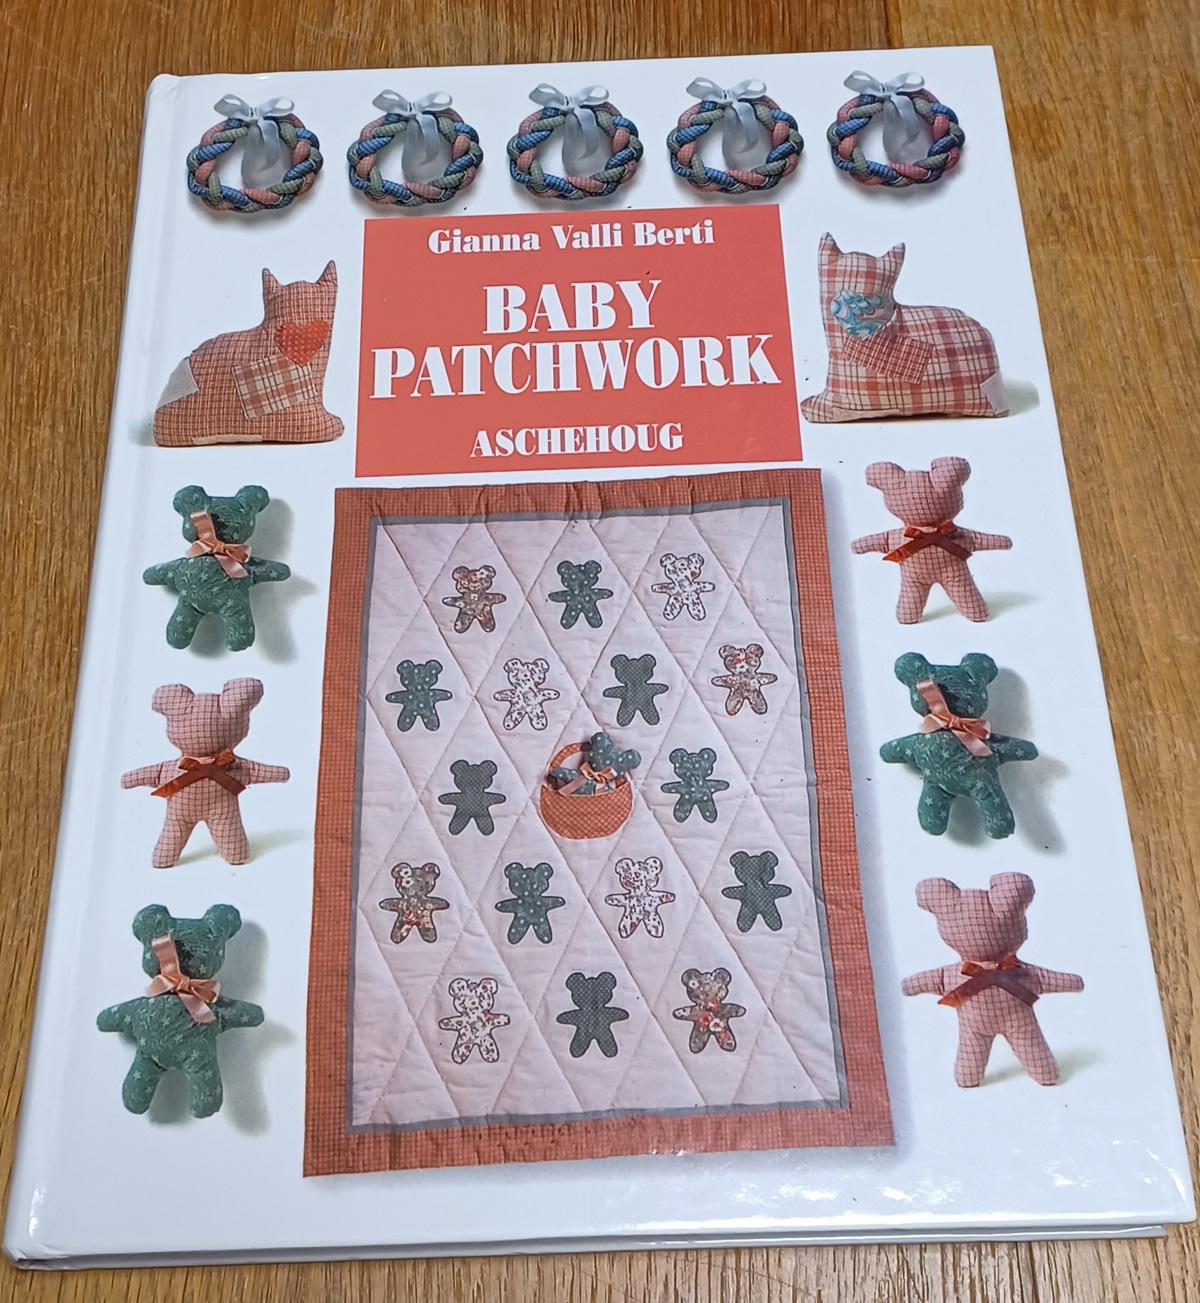 Baby patchwork